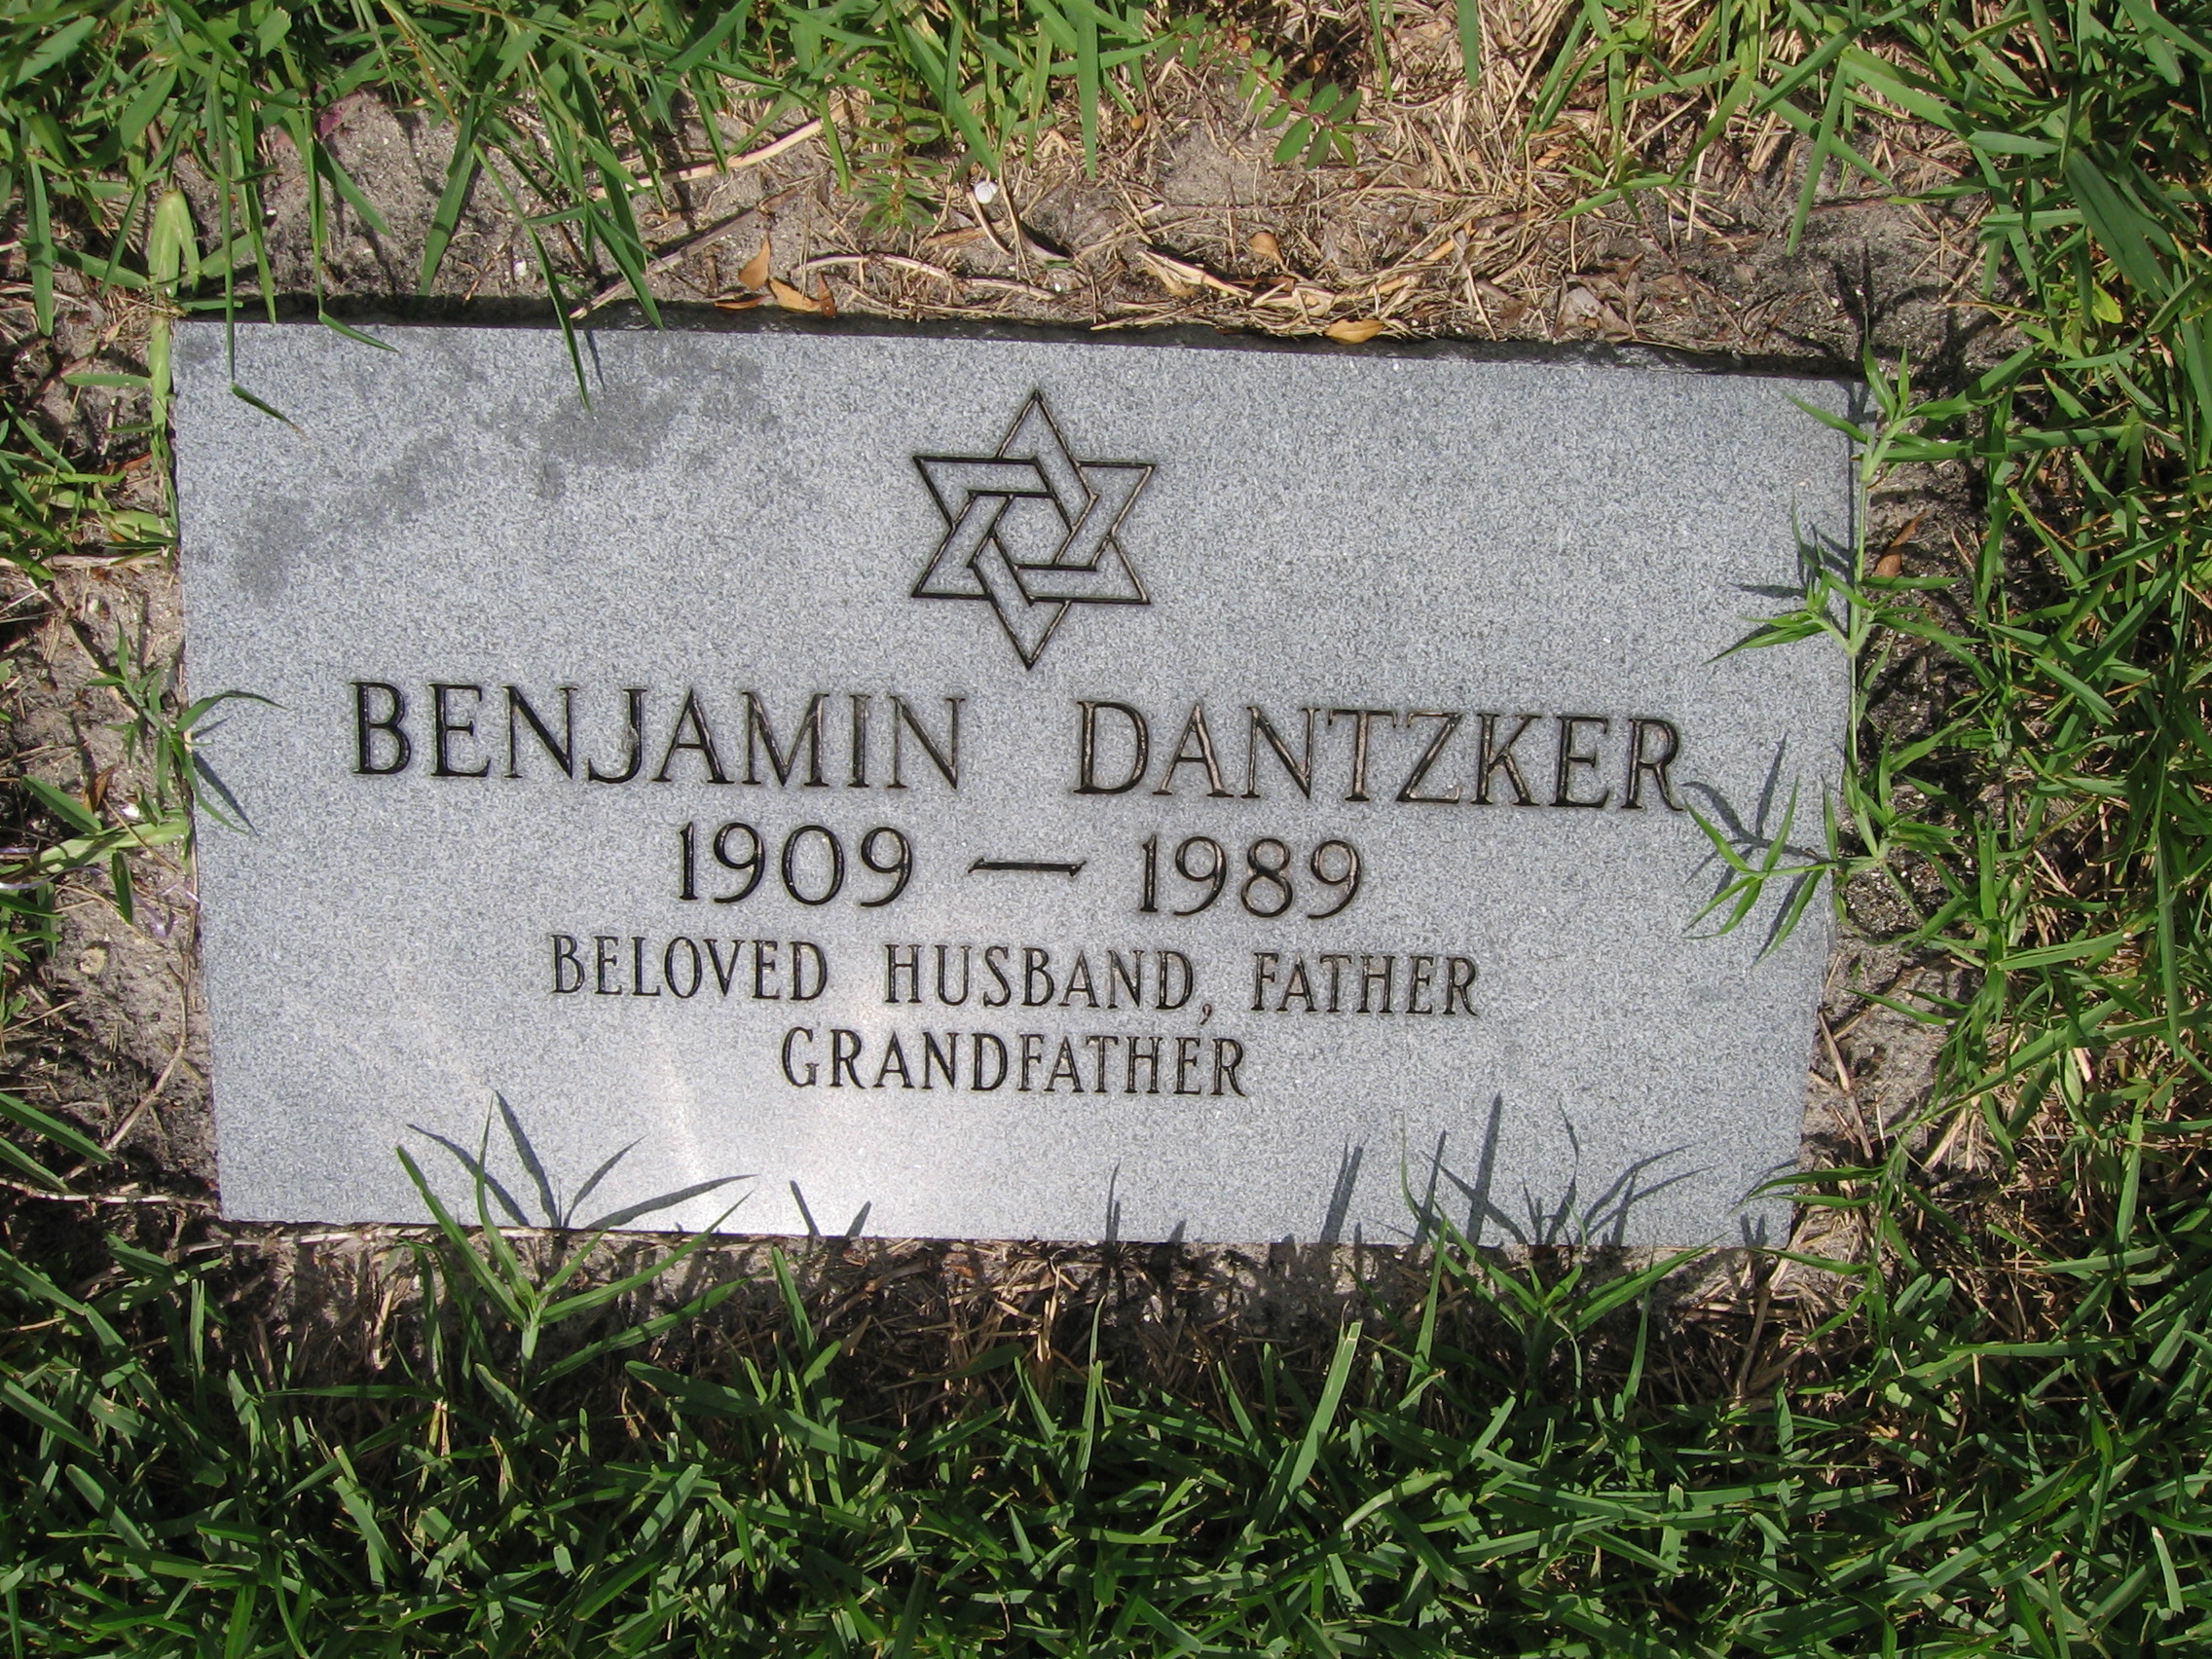 Benjamin Dantzker